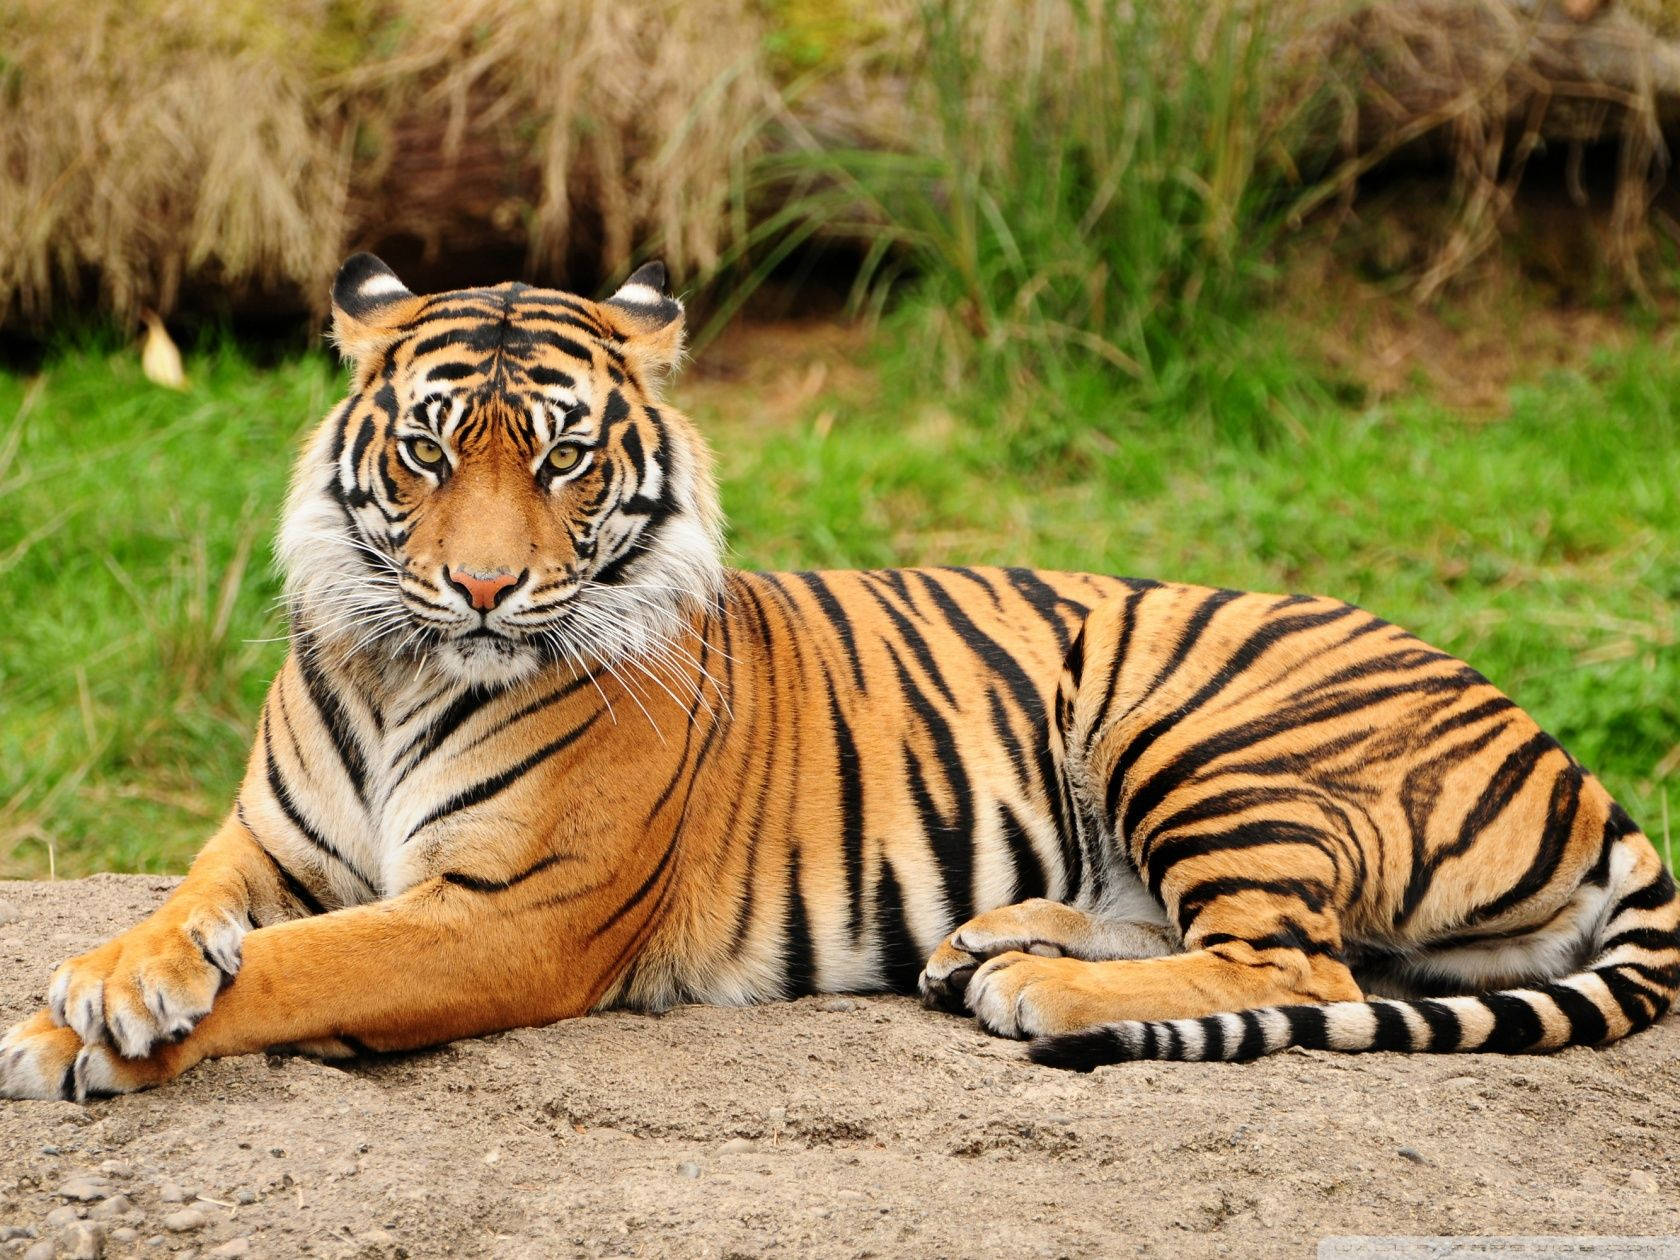 Sitting Tiger Full Body Wallpaper